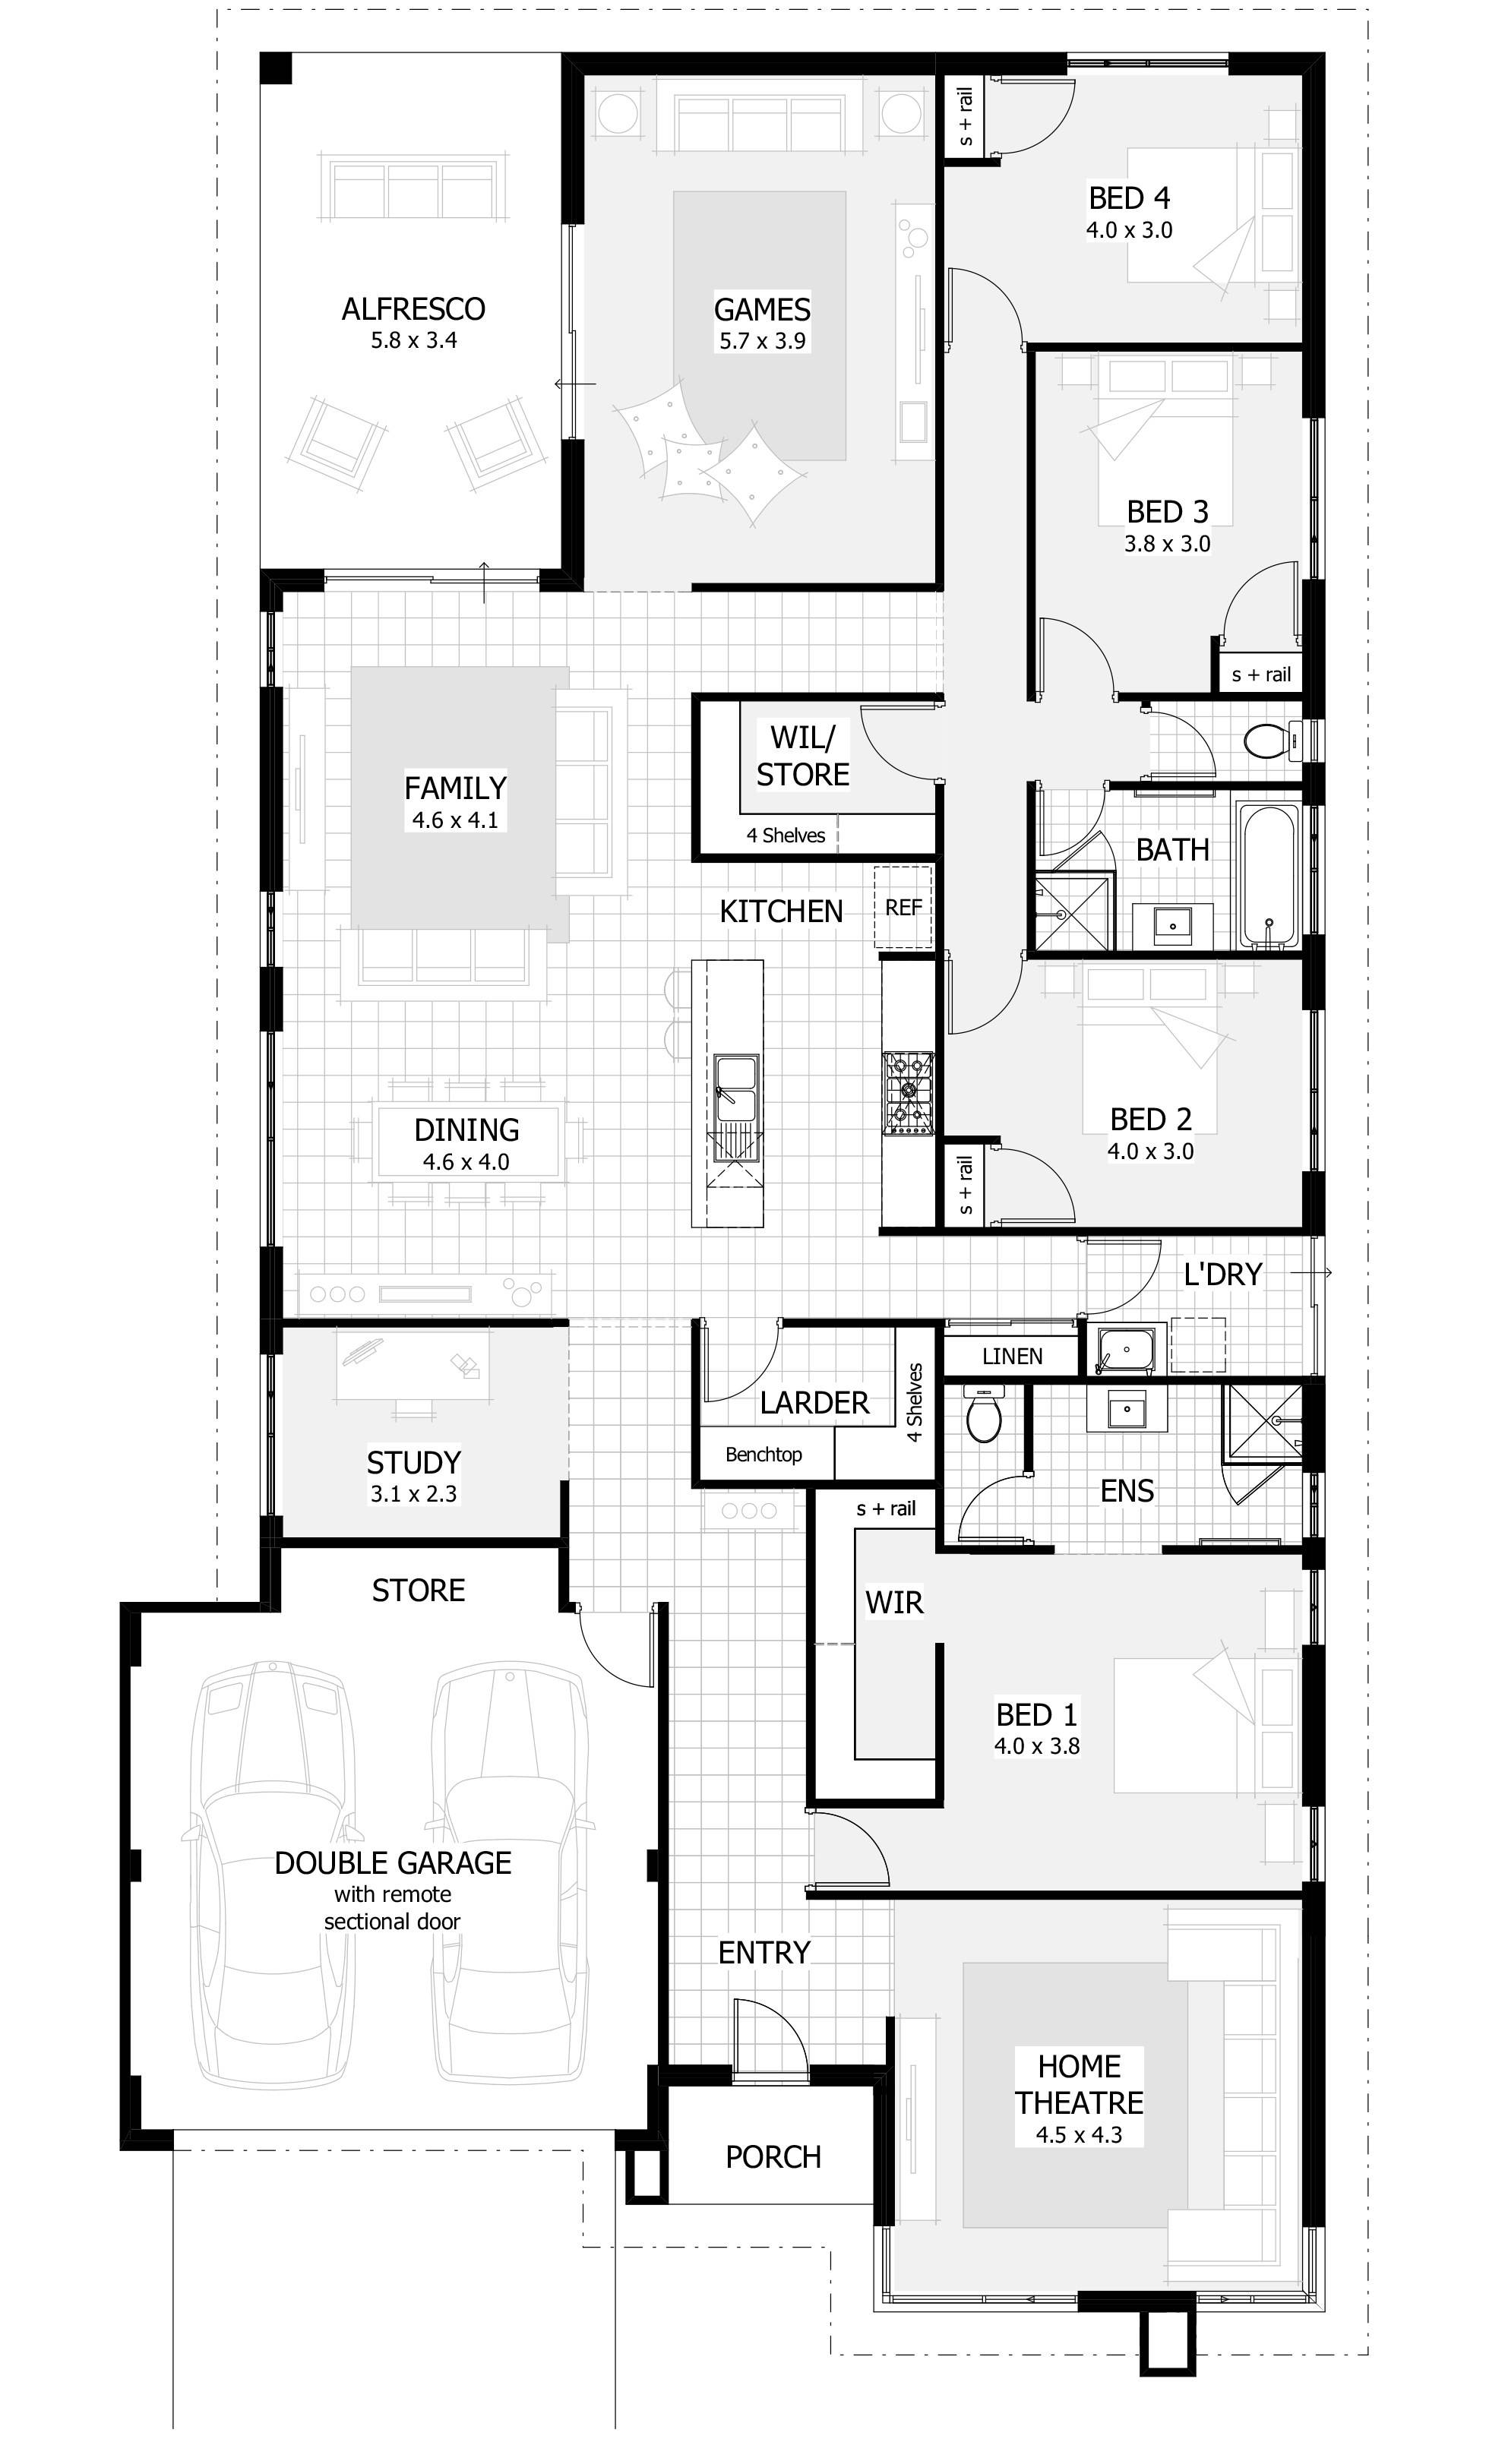 14.SIMPHOME.COM 5 bedroom modern house plans for house plan cottage